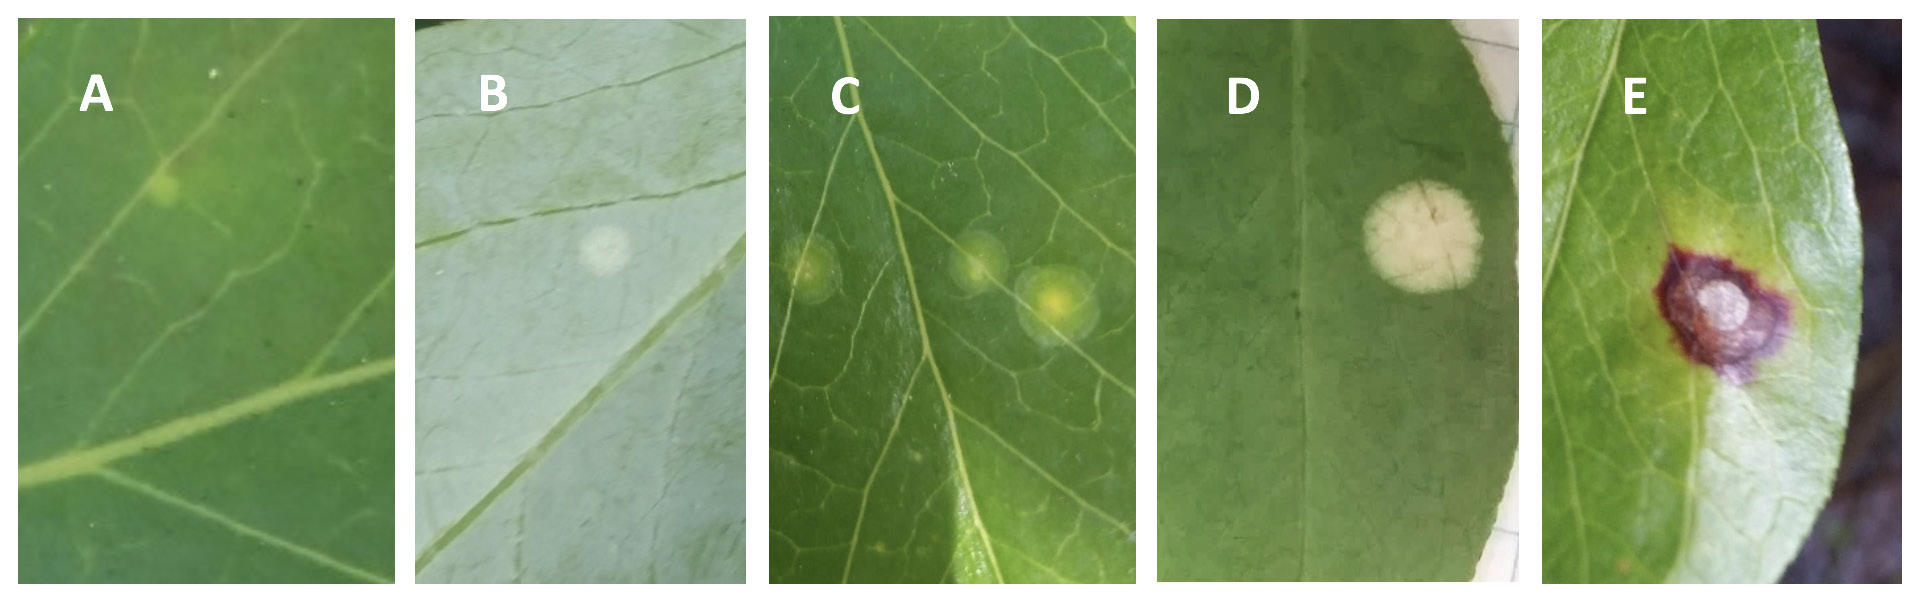 :Progression of exobasidium leaf spor symptoms